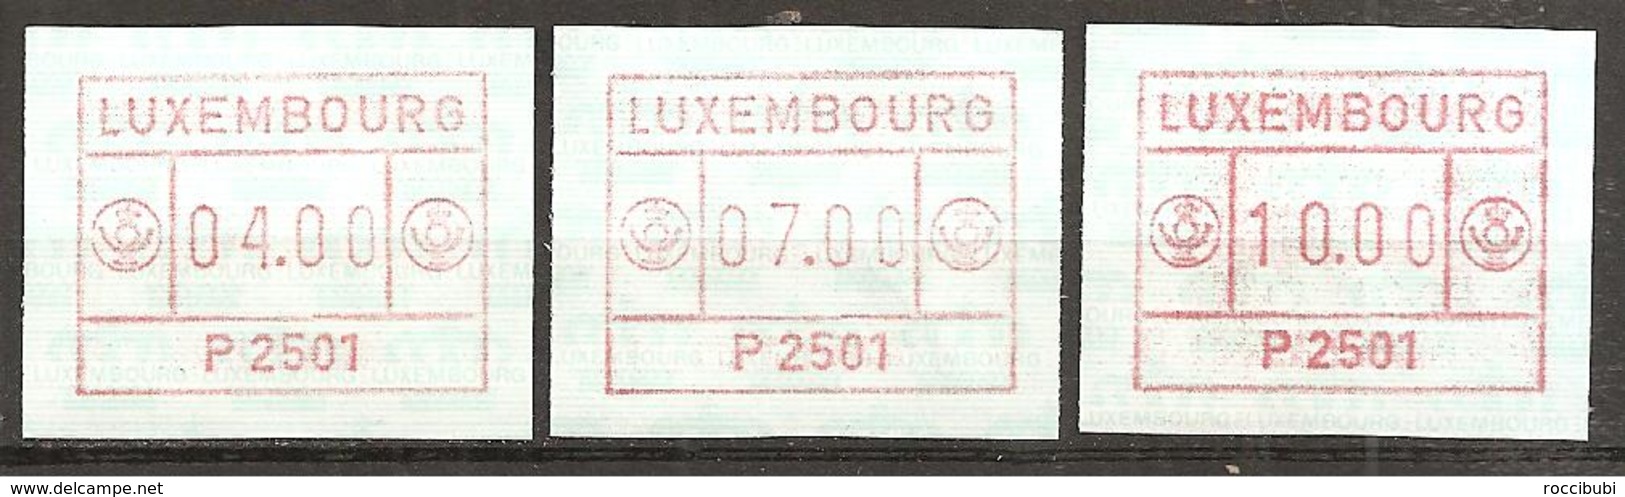 Luxemburg 1983 // Michel ATM 1 ** - Automatenmarken